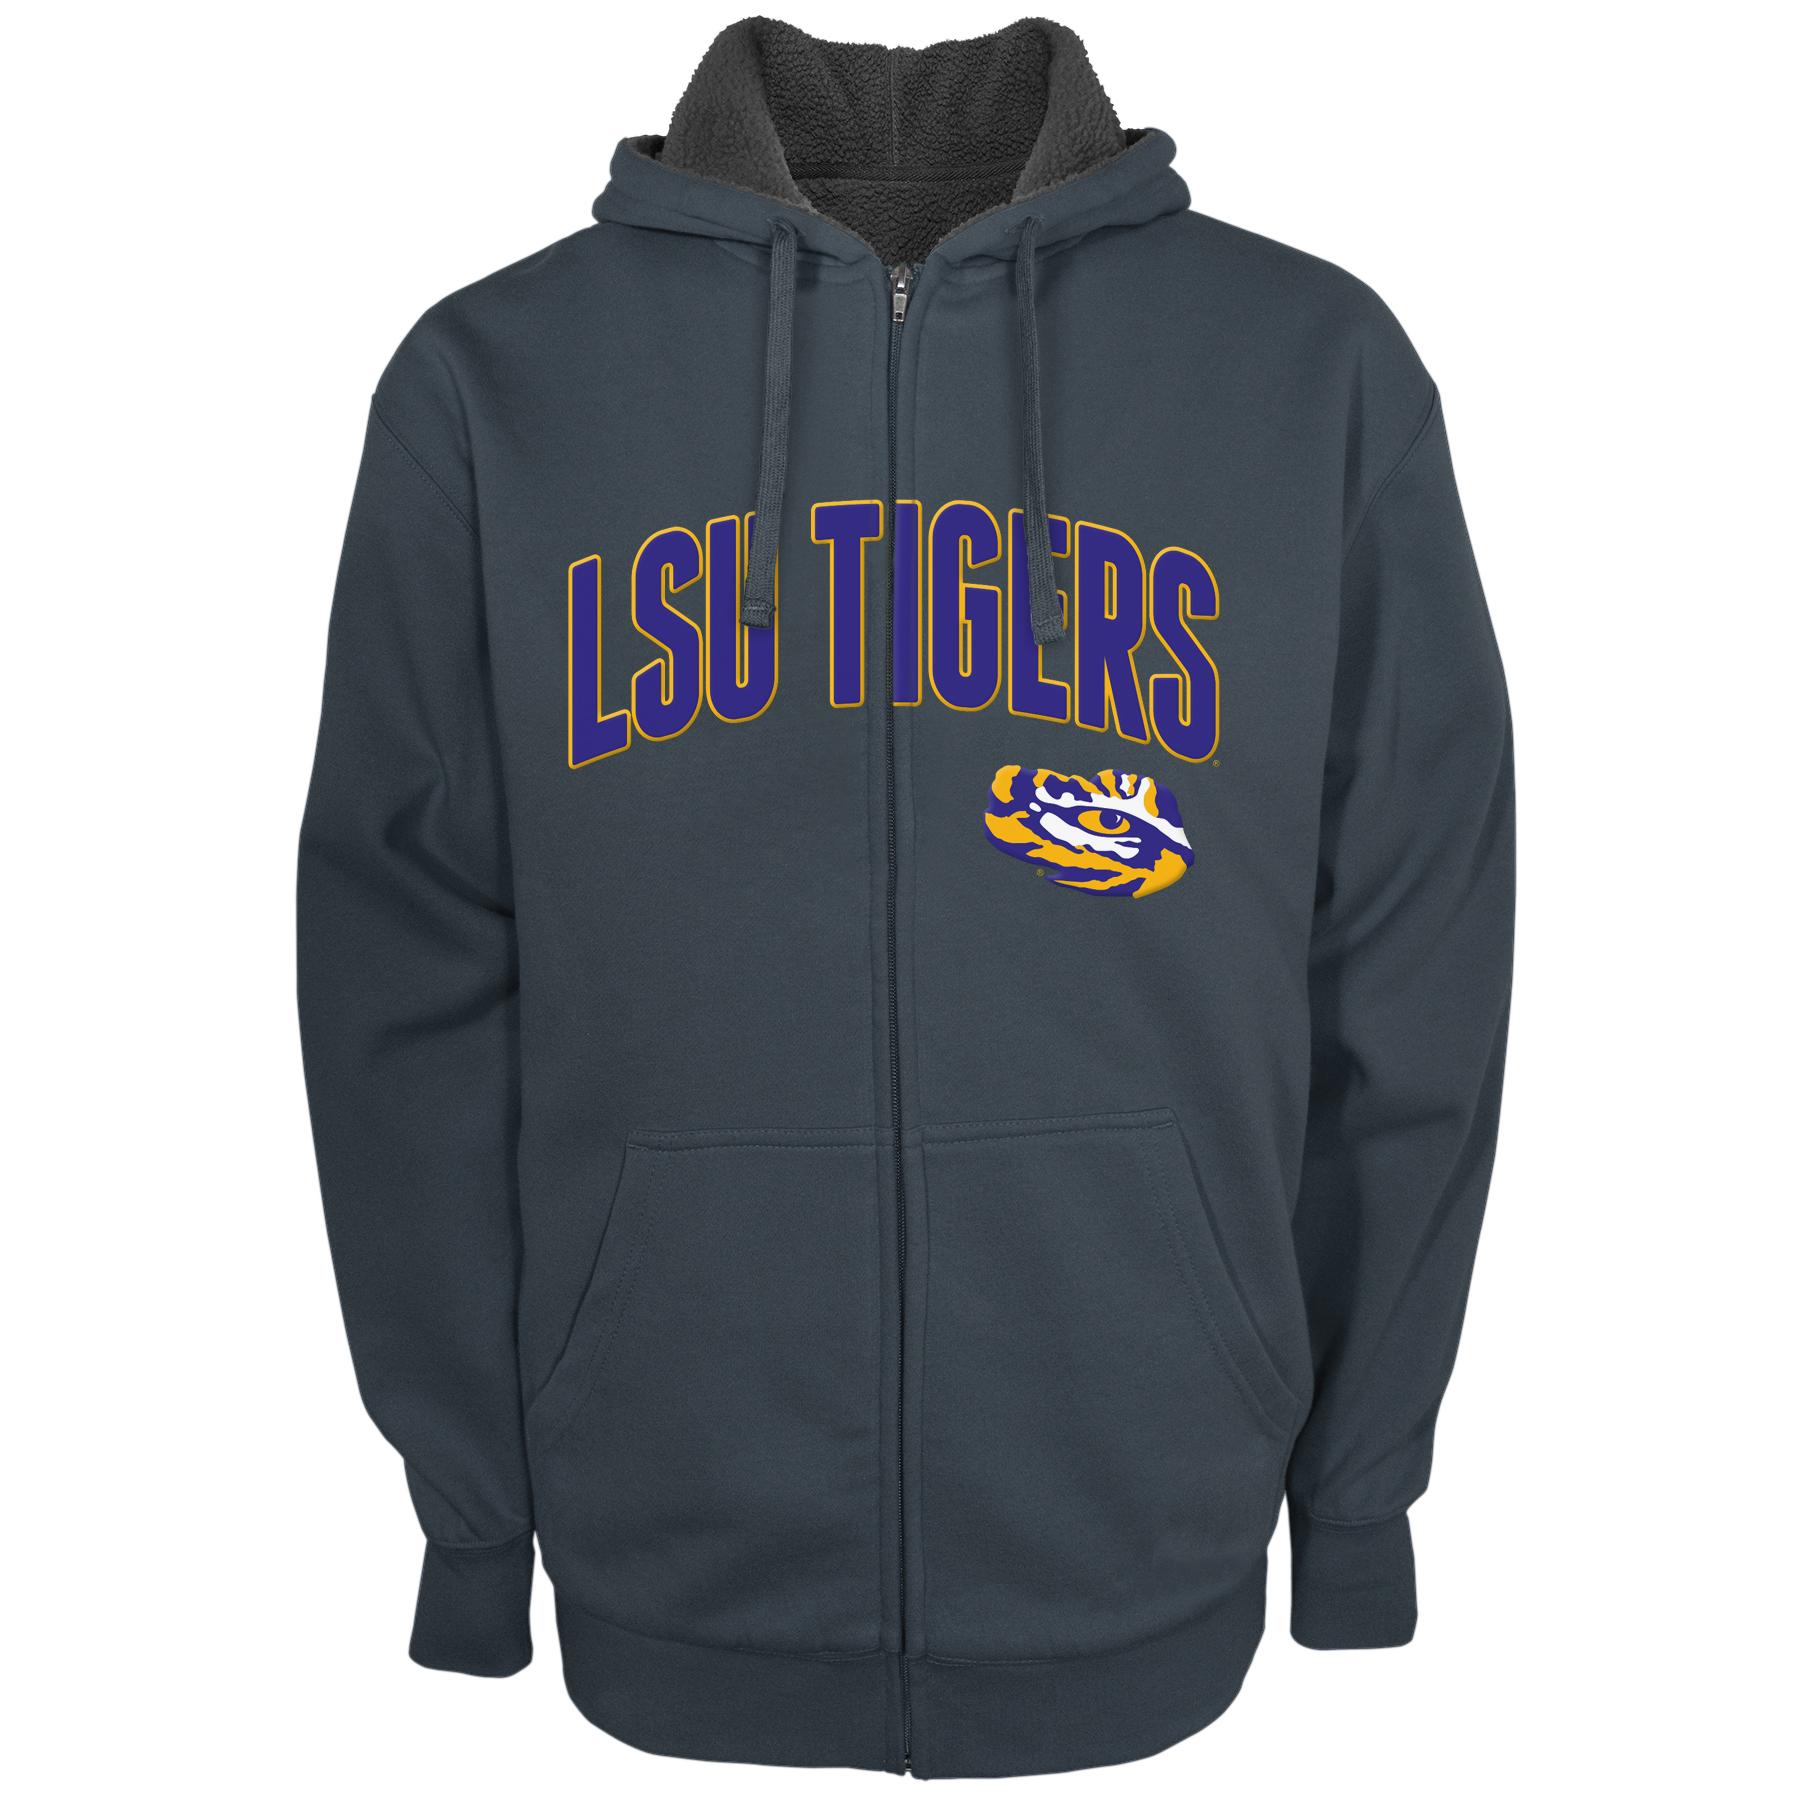 NCAA Men's Lined Hoodie Jacket - Louisiana State University Tigers